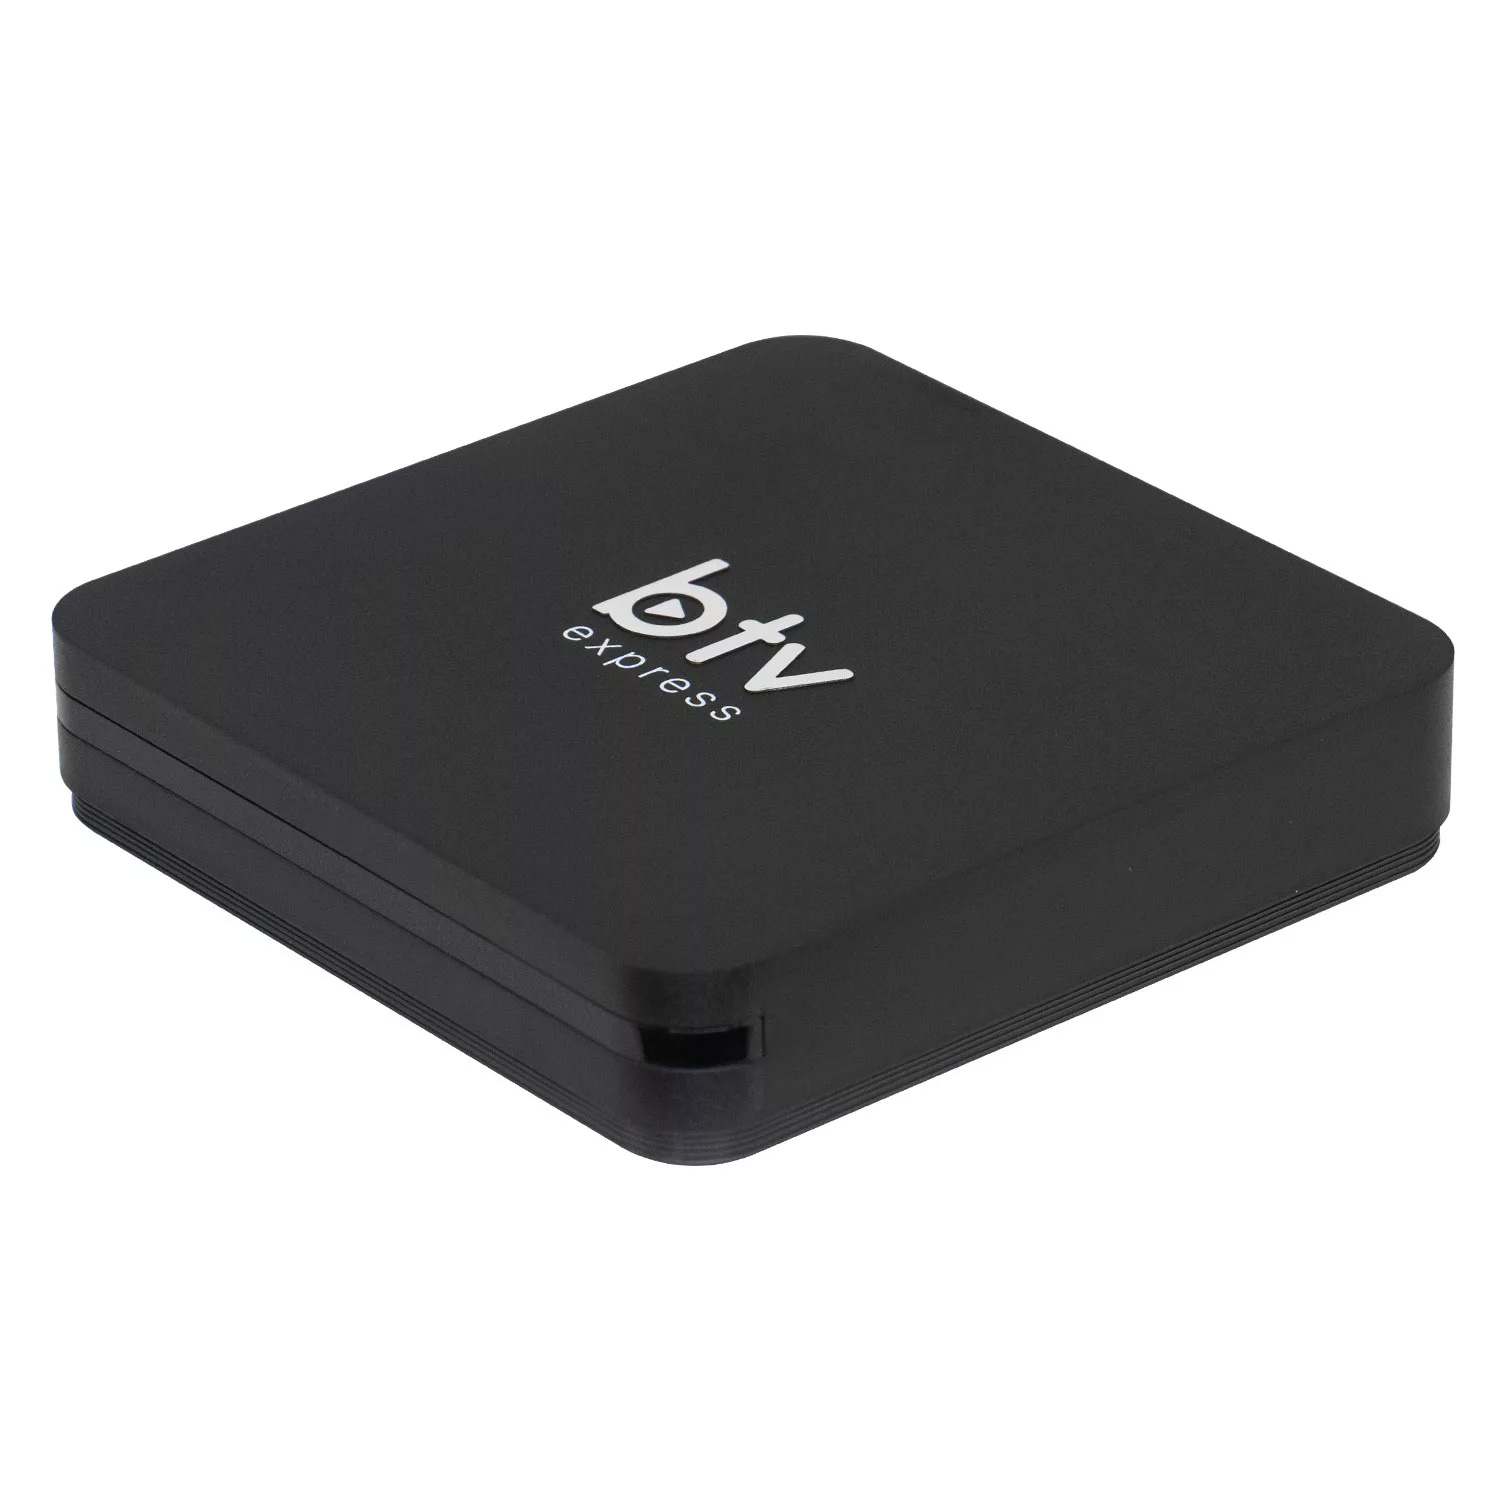 Receptor BTV Express E13 2GB RAM / 8GB / Full HD / IPTV / VOD / My Family Wifi-5G - Preto